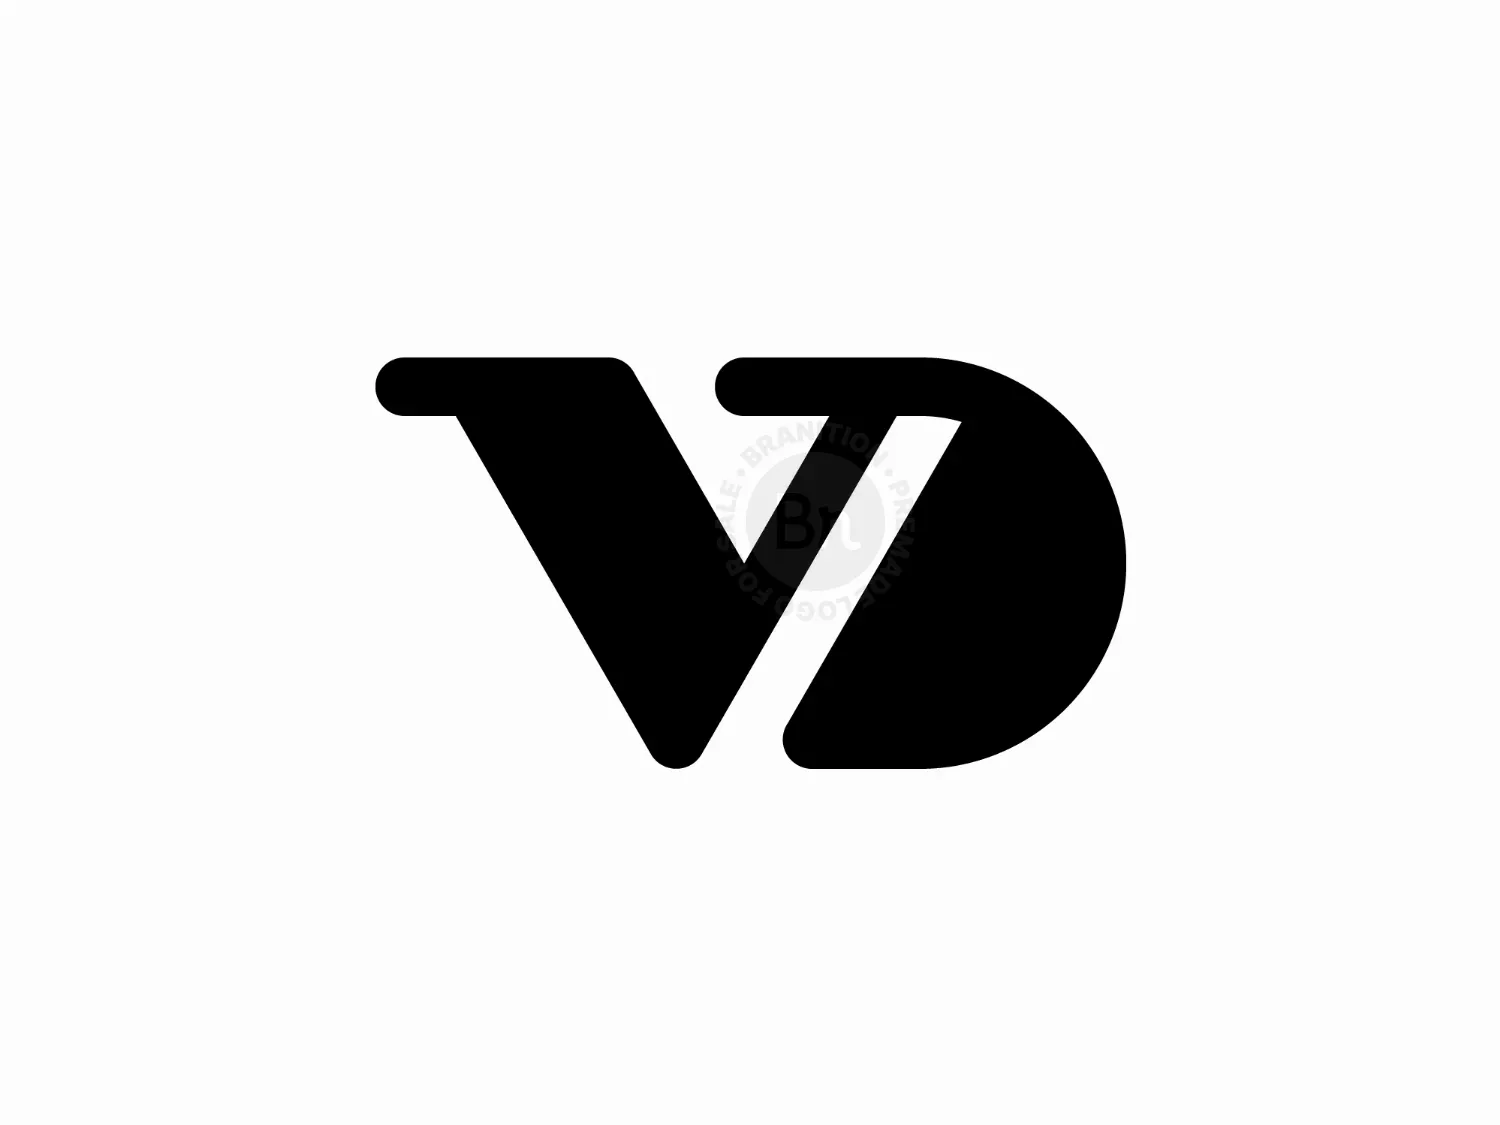 Dv logo monogram emblem style with crown shape Vector Image